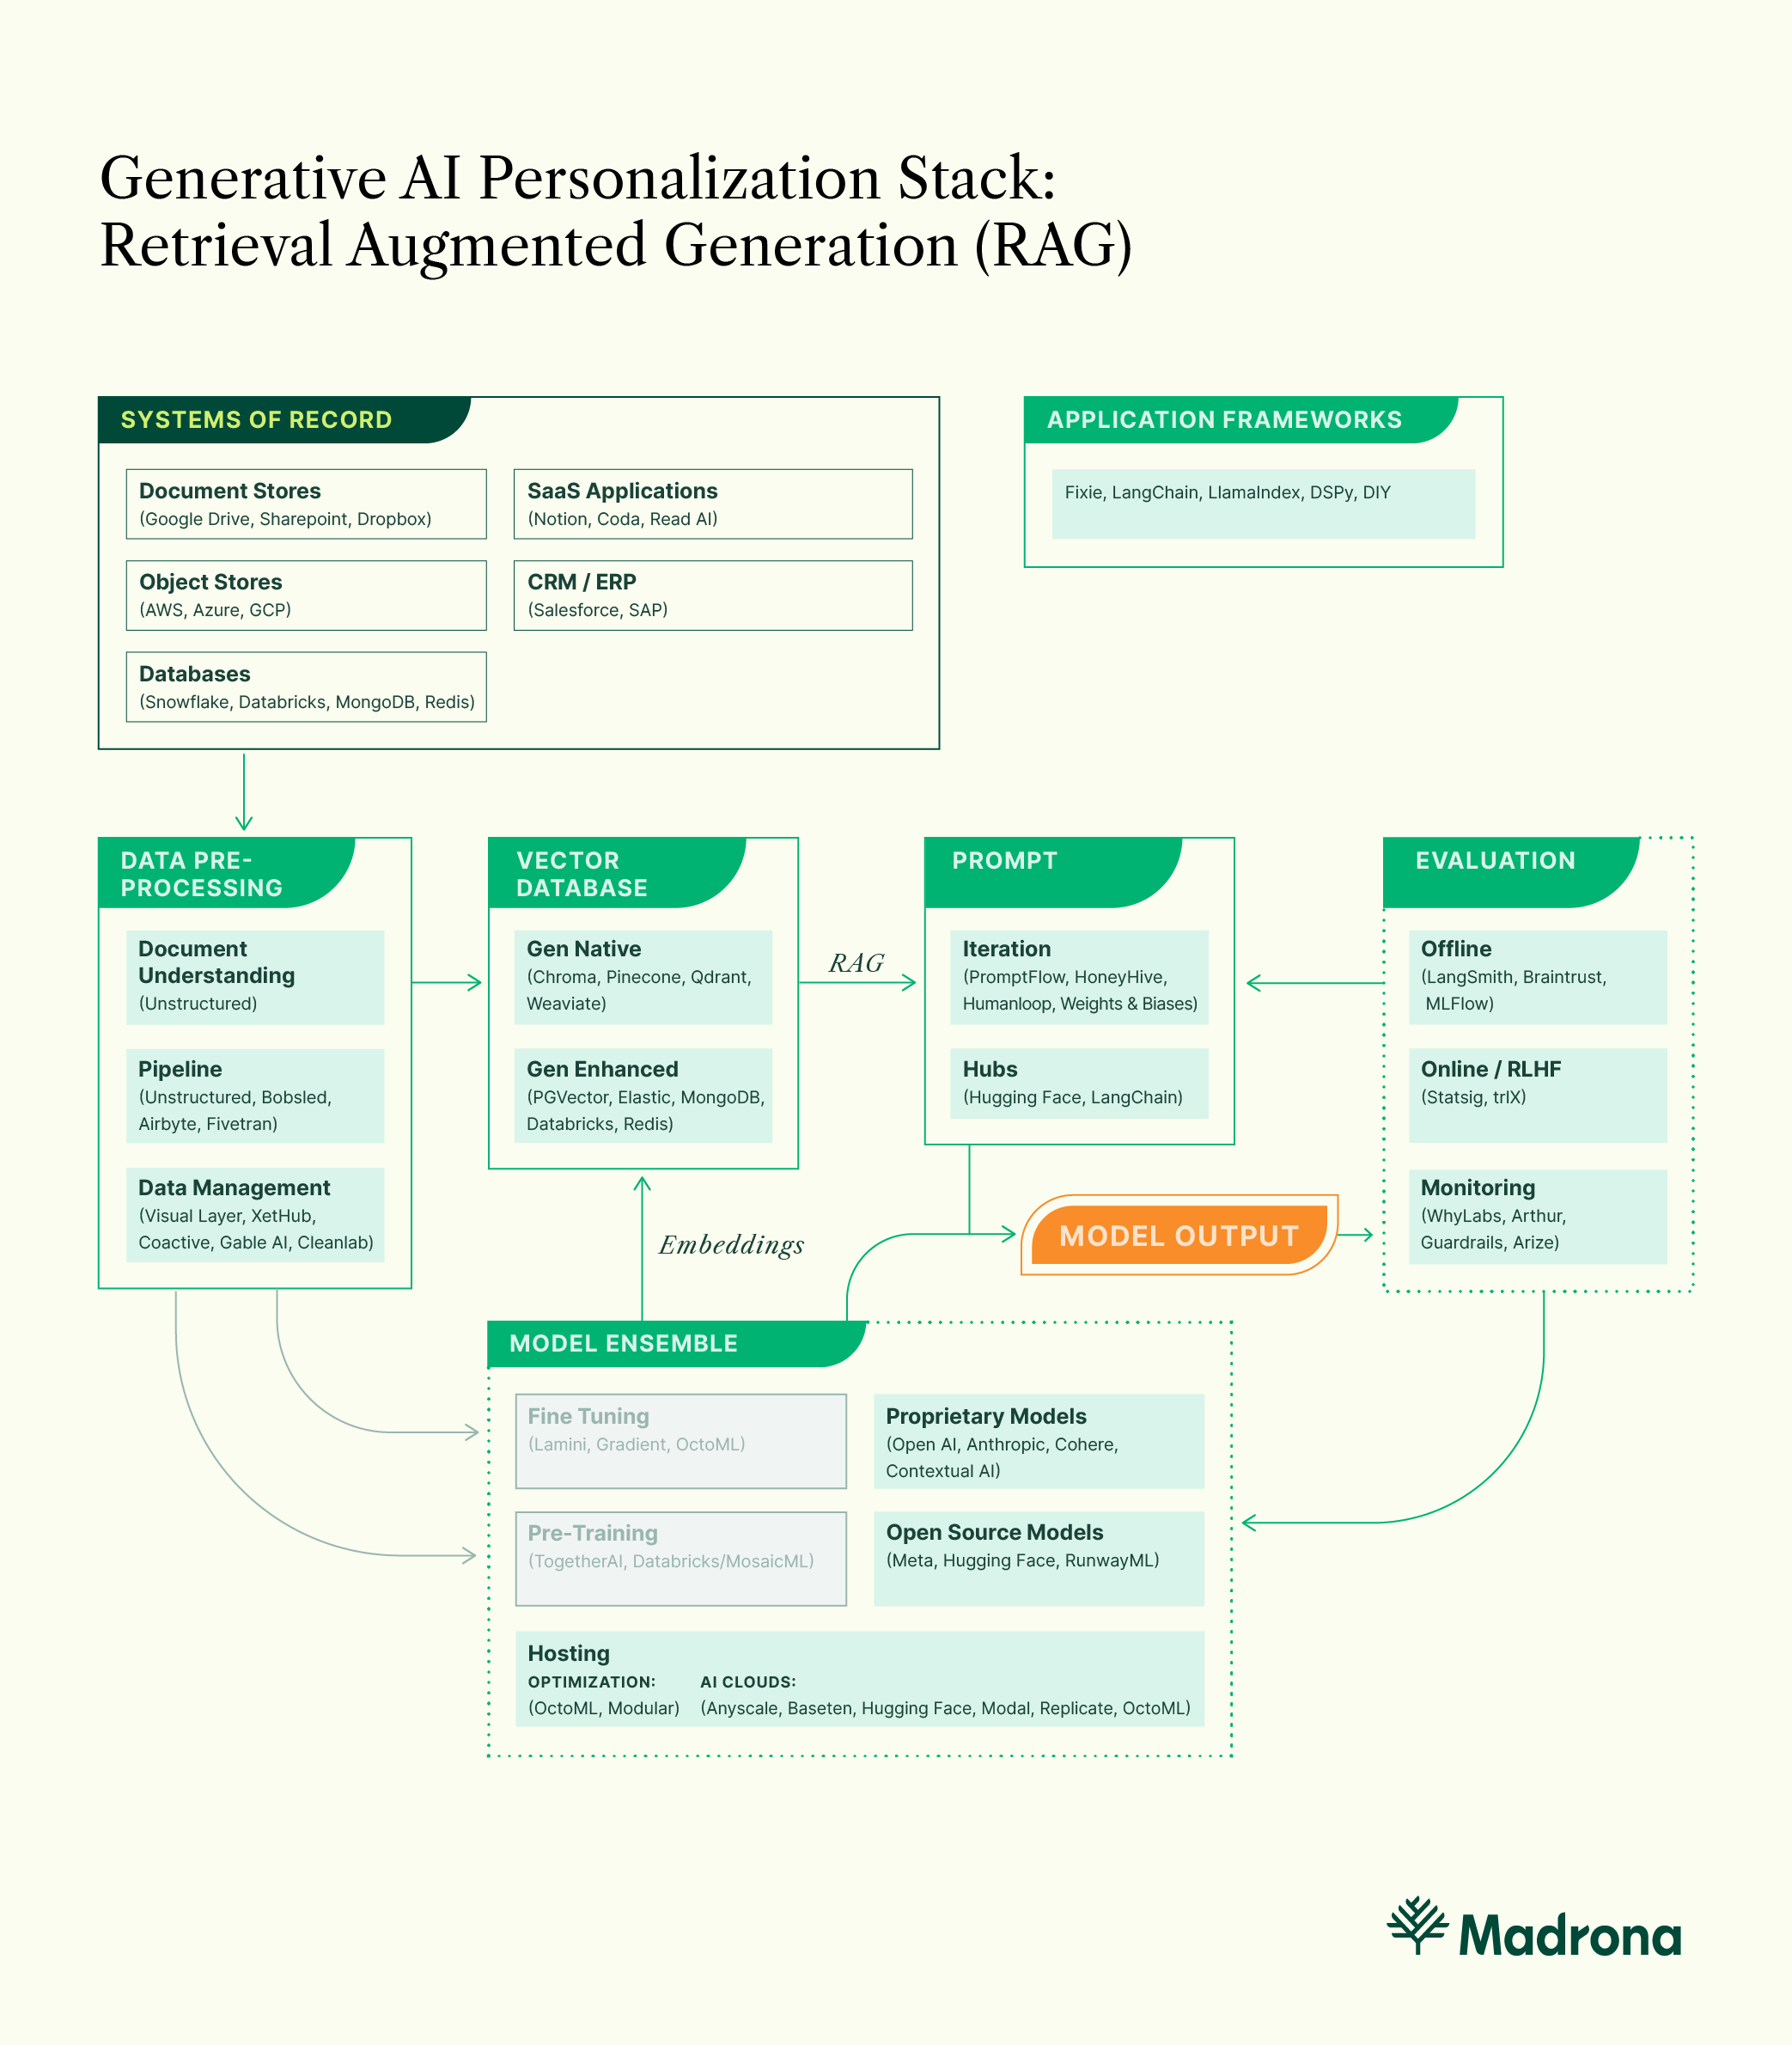 Personalizing generative applications - RAG